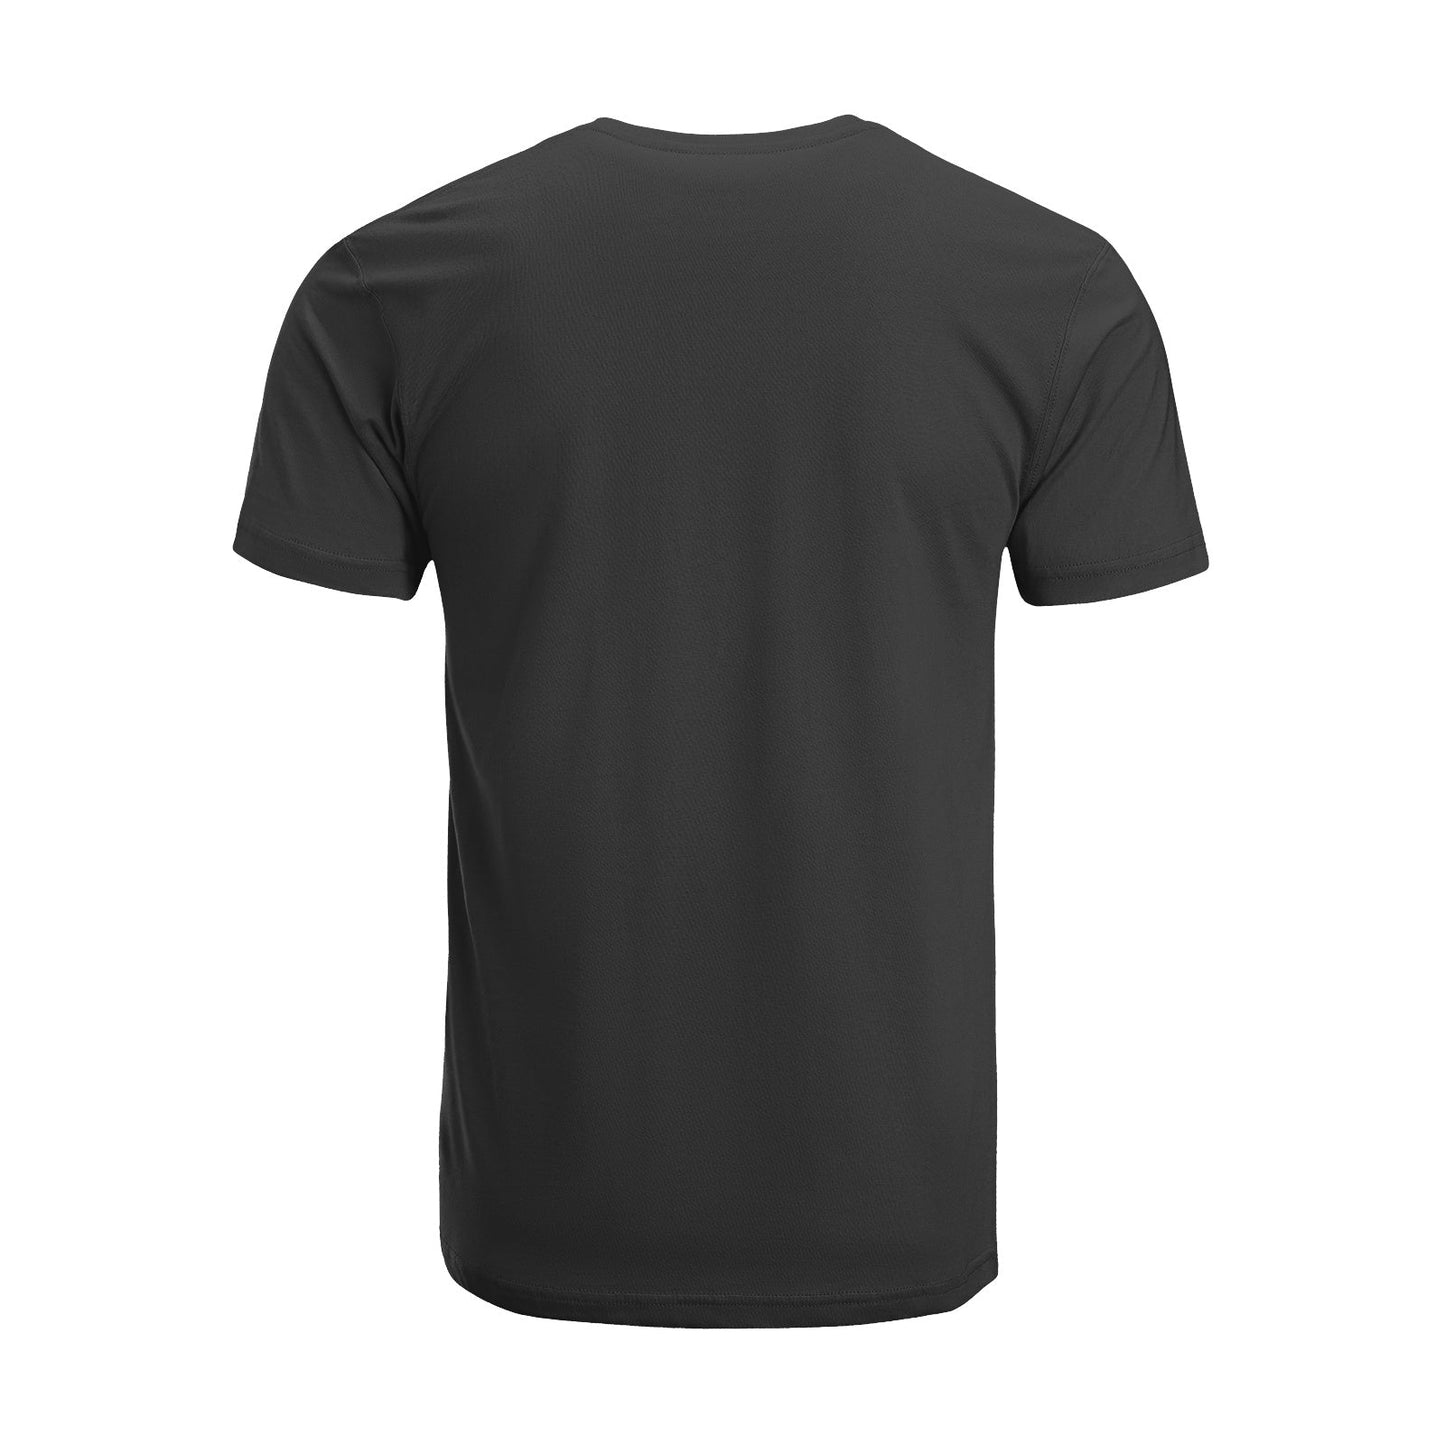 Unisex Short Sleeve Crew Neck Cotton Jersey T-Shirt USA 04